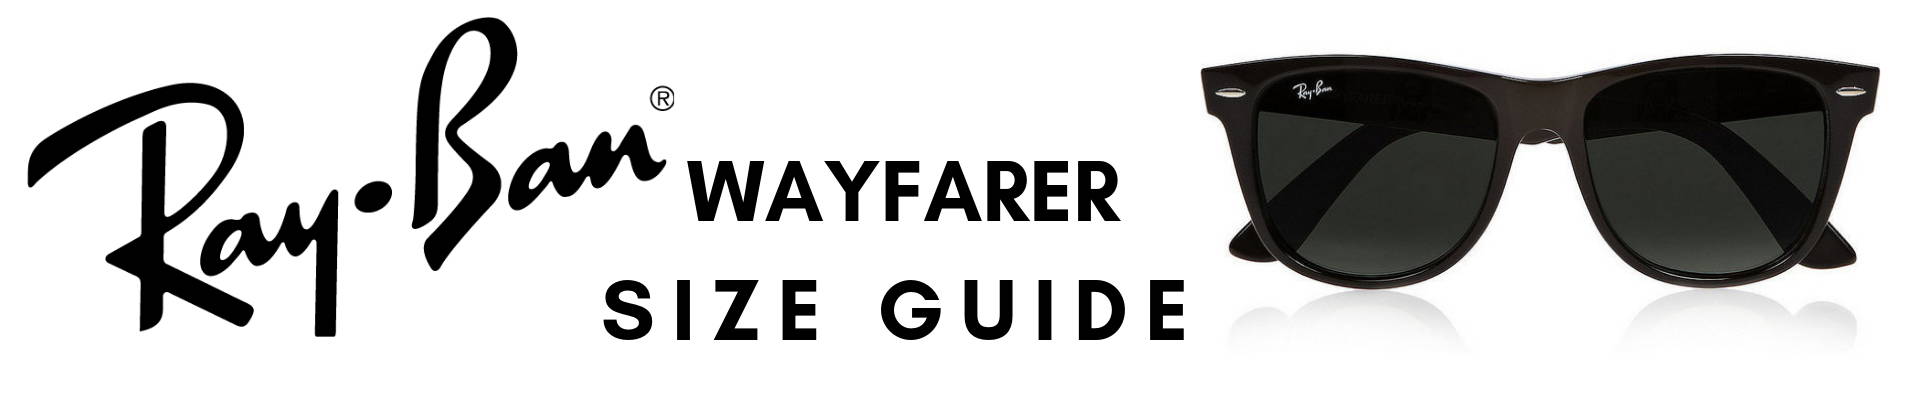 ray ban new wayfarer dimensions